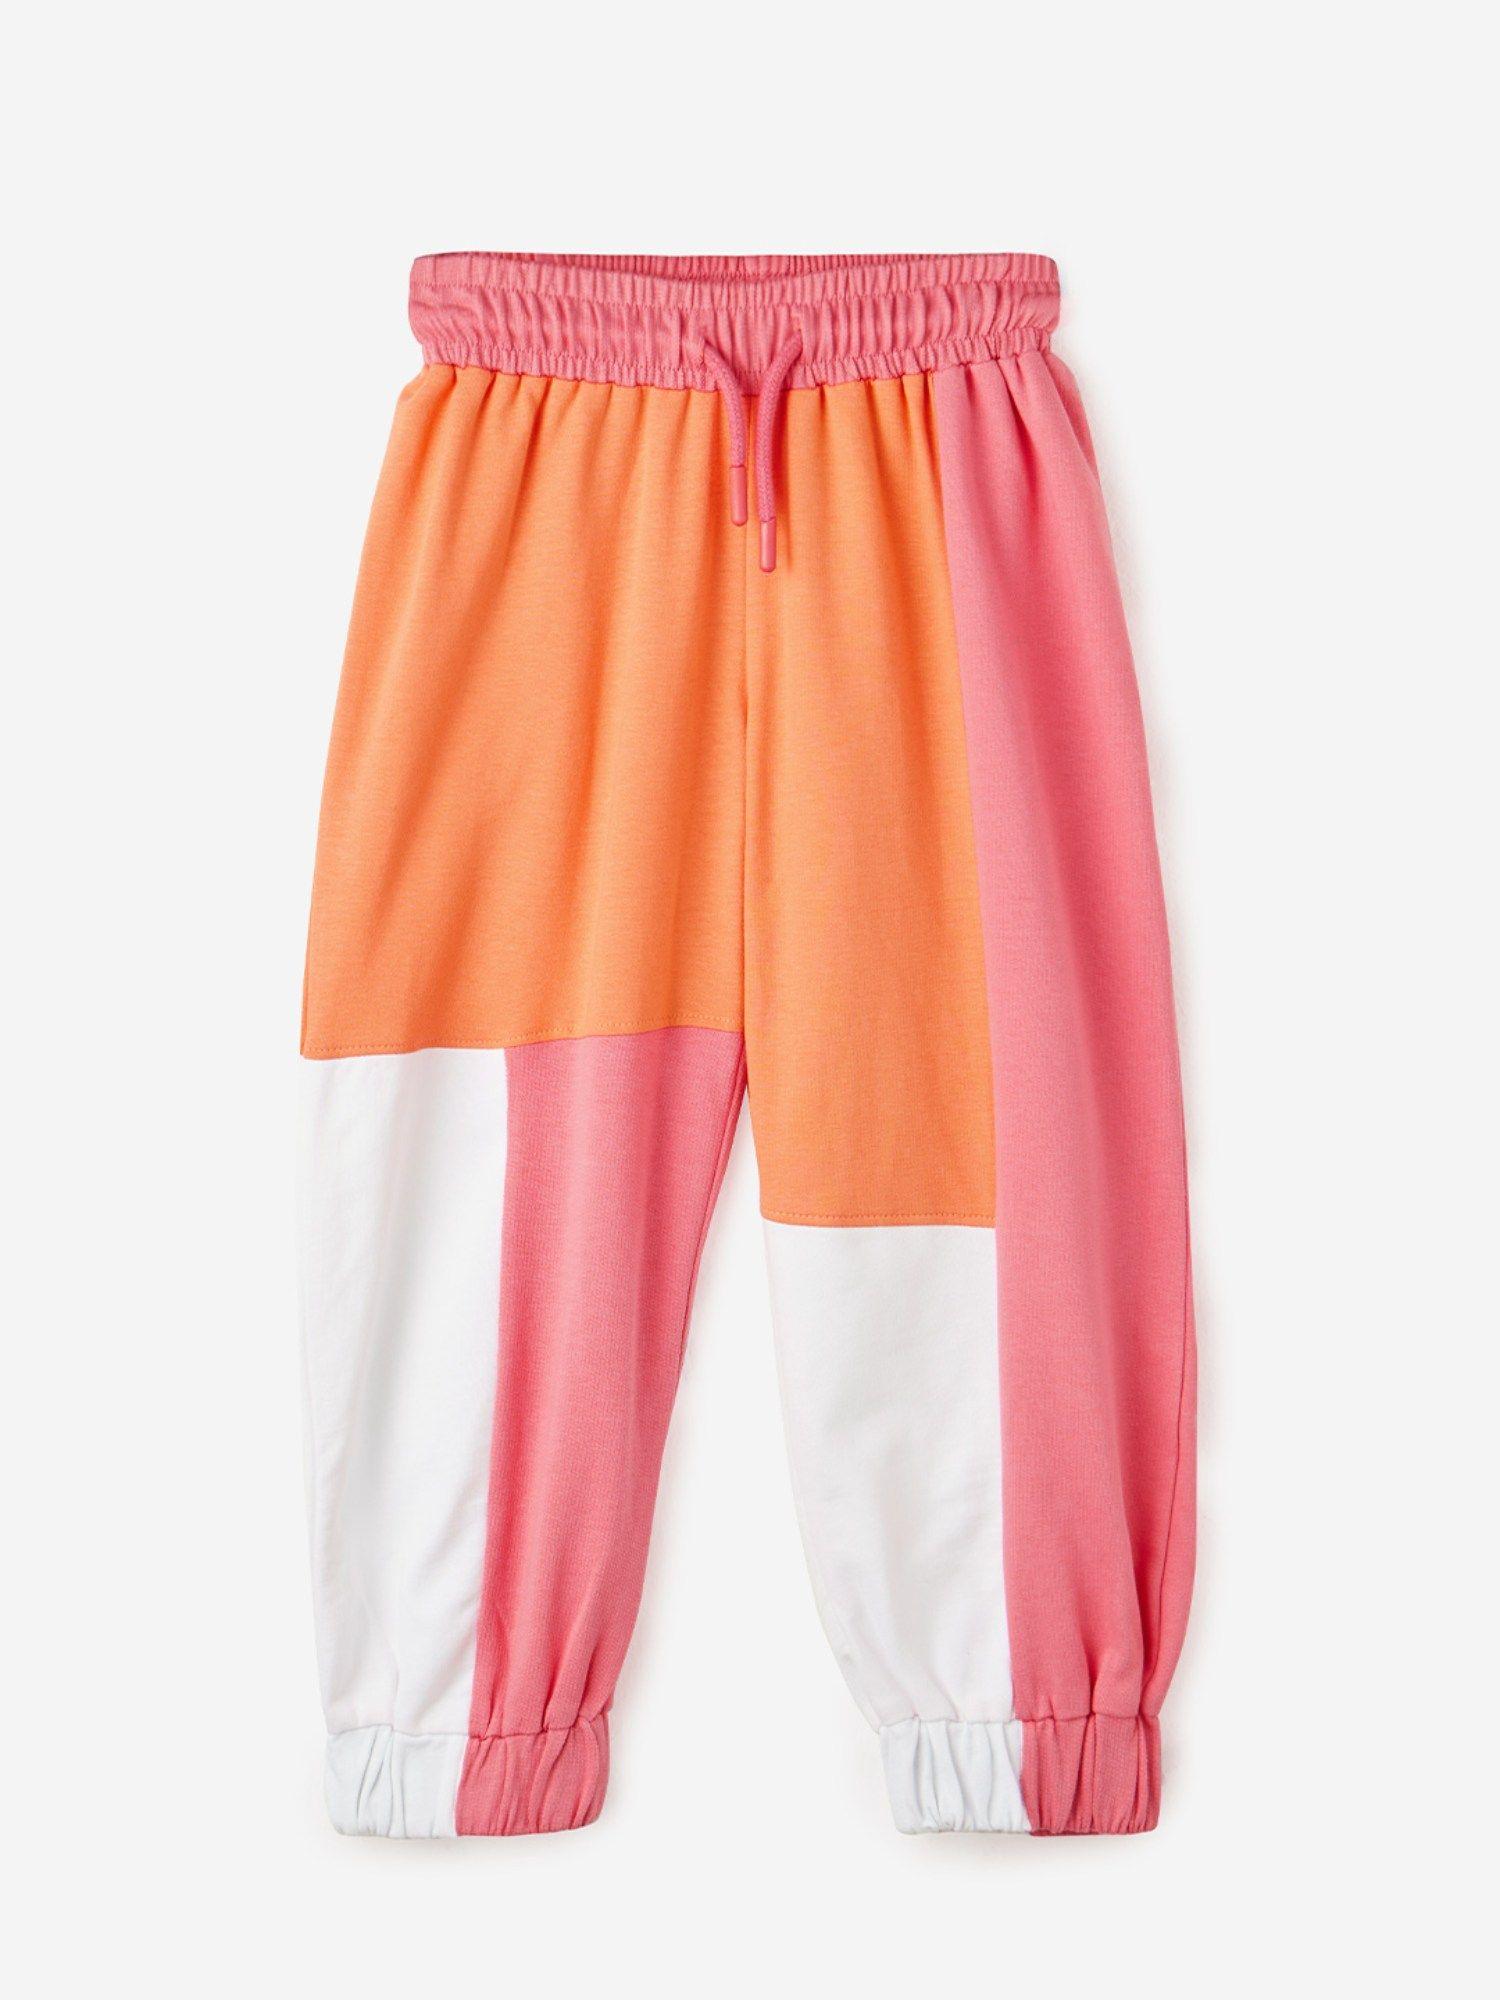 original solids: pink & white girls cotton jogger